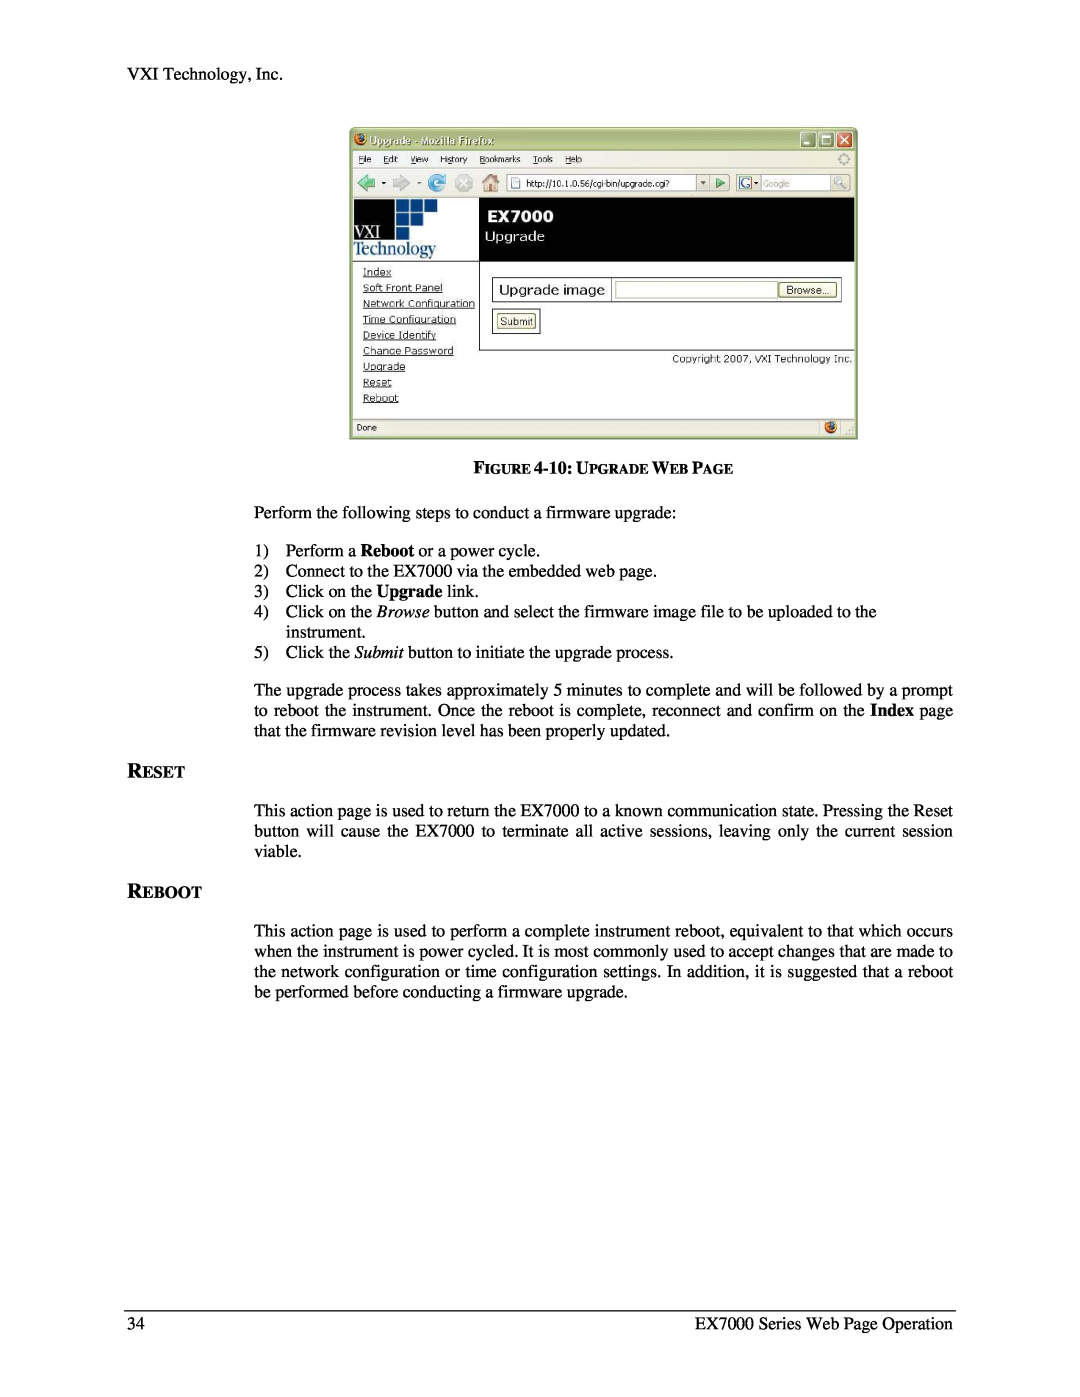 VXI EX7000 user manual Reset, Reboot, 10 UPGRADE WEB PAGE 